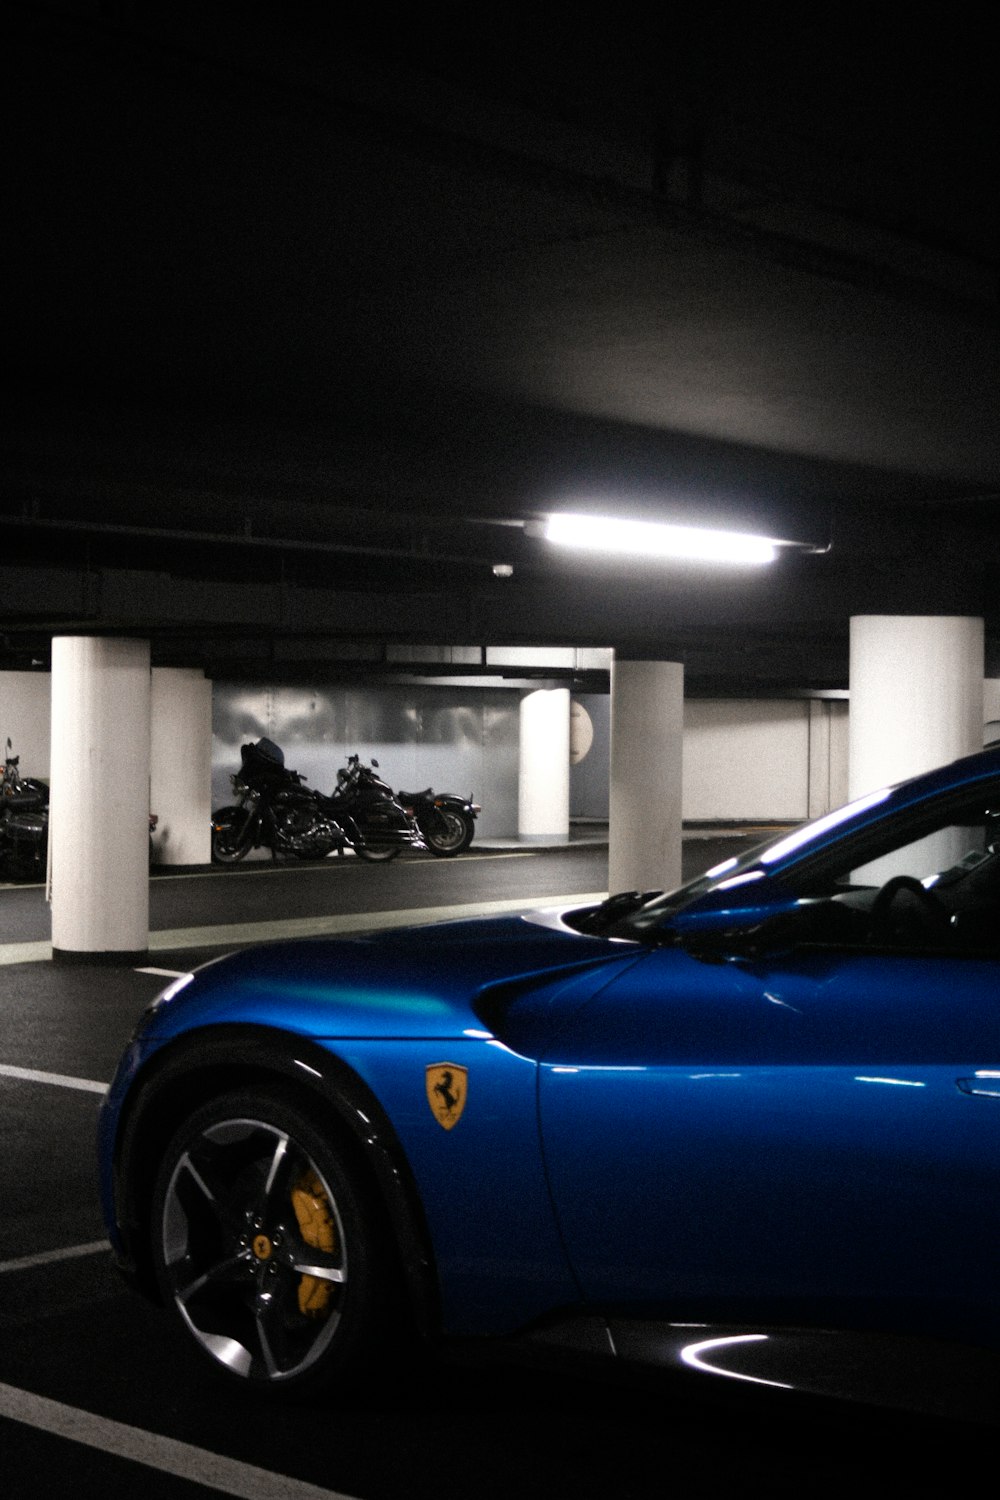 a blue sports car parked in a parking garage